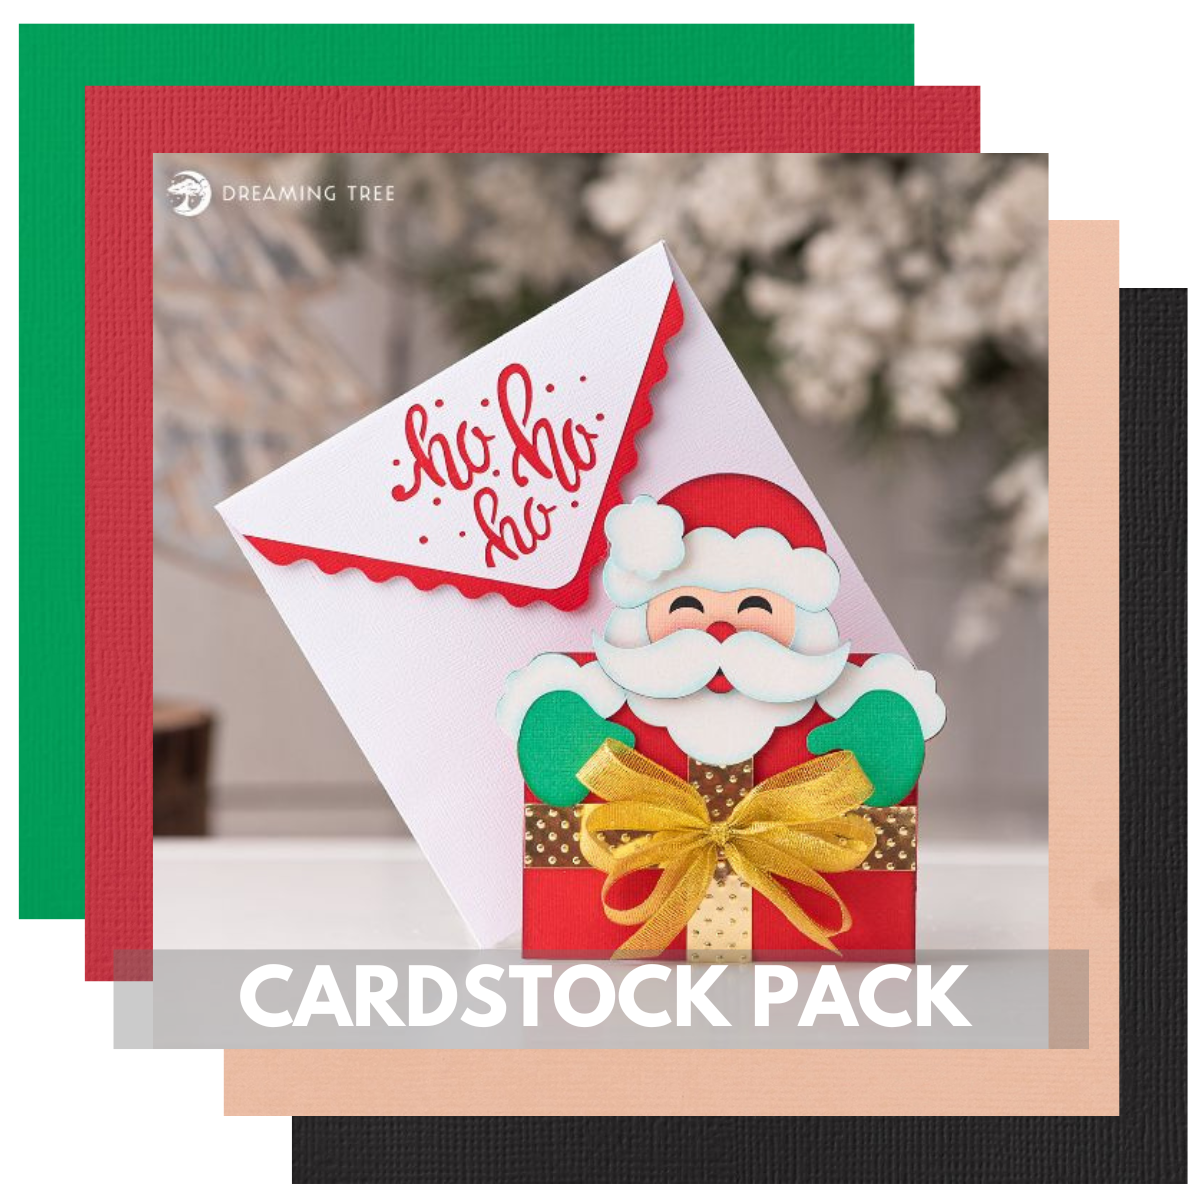 Santa Gift Card Holder Cardstock Kit matches Santa Gift Card Holder SVG from Dreaming Tree